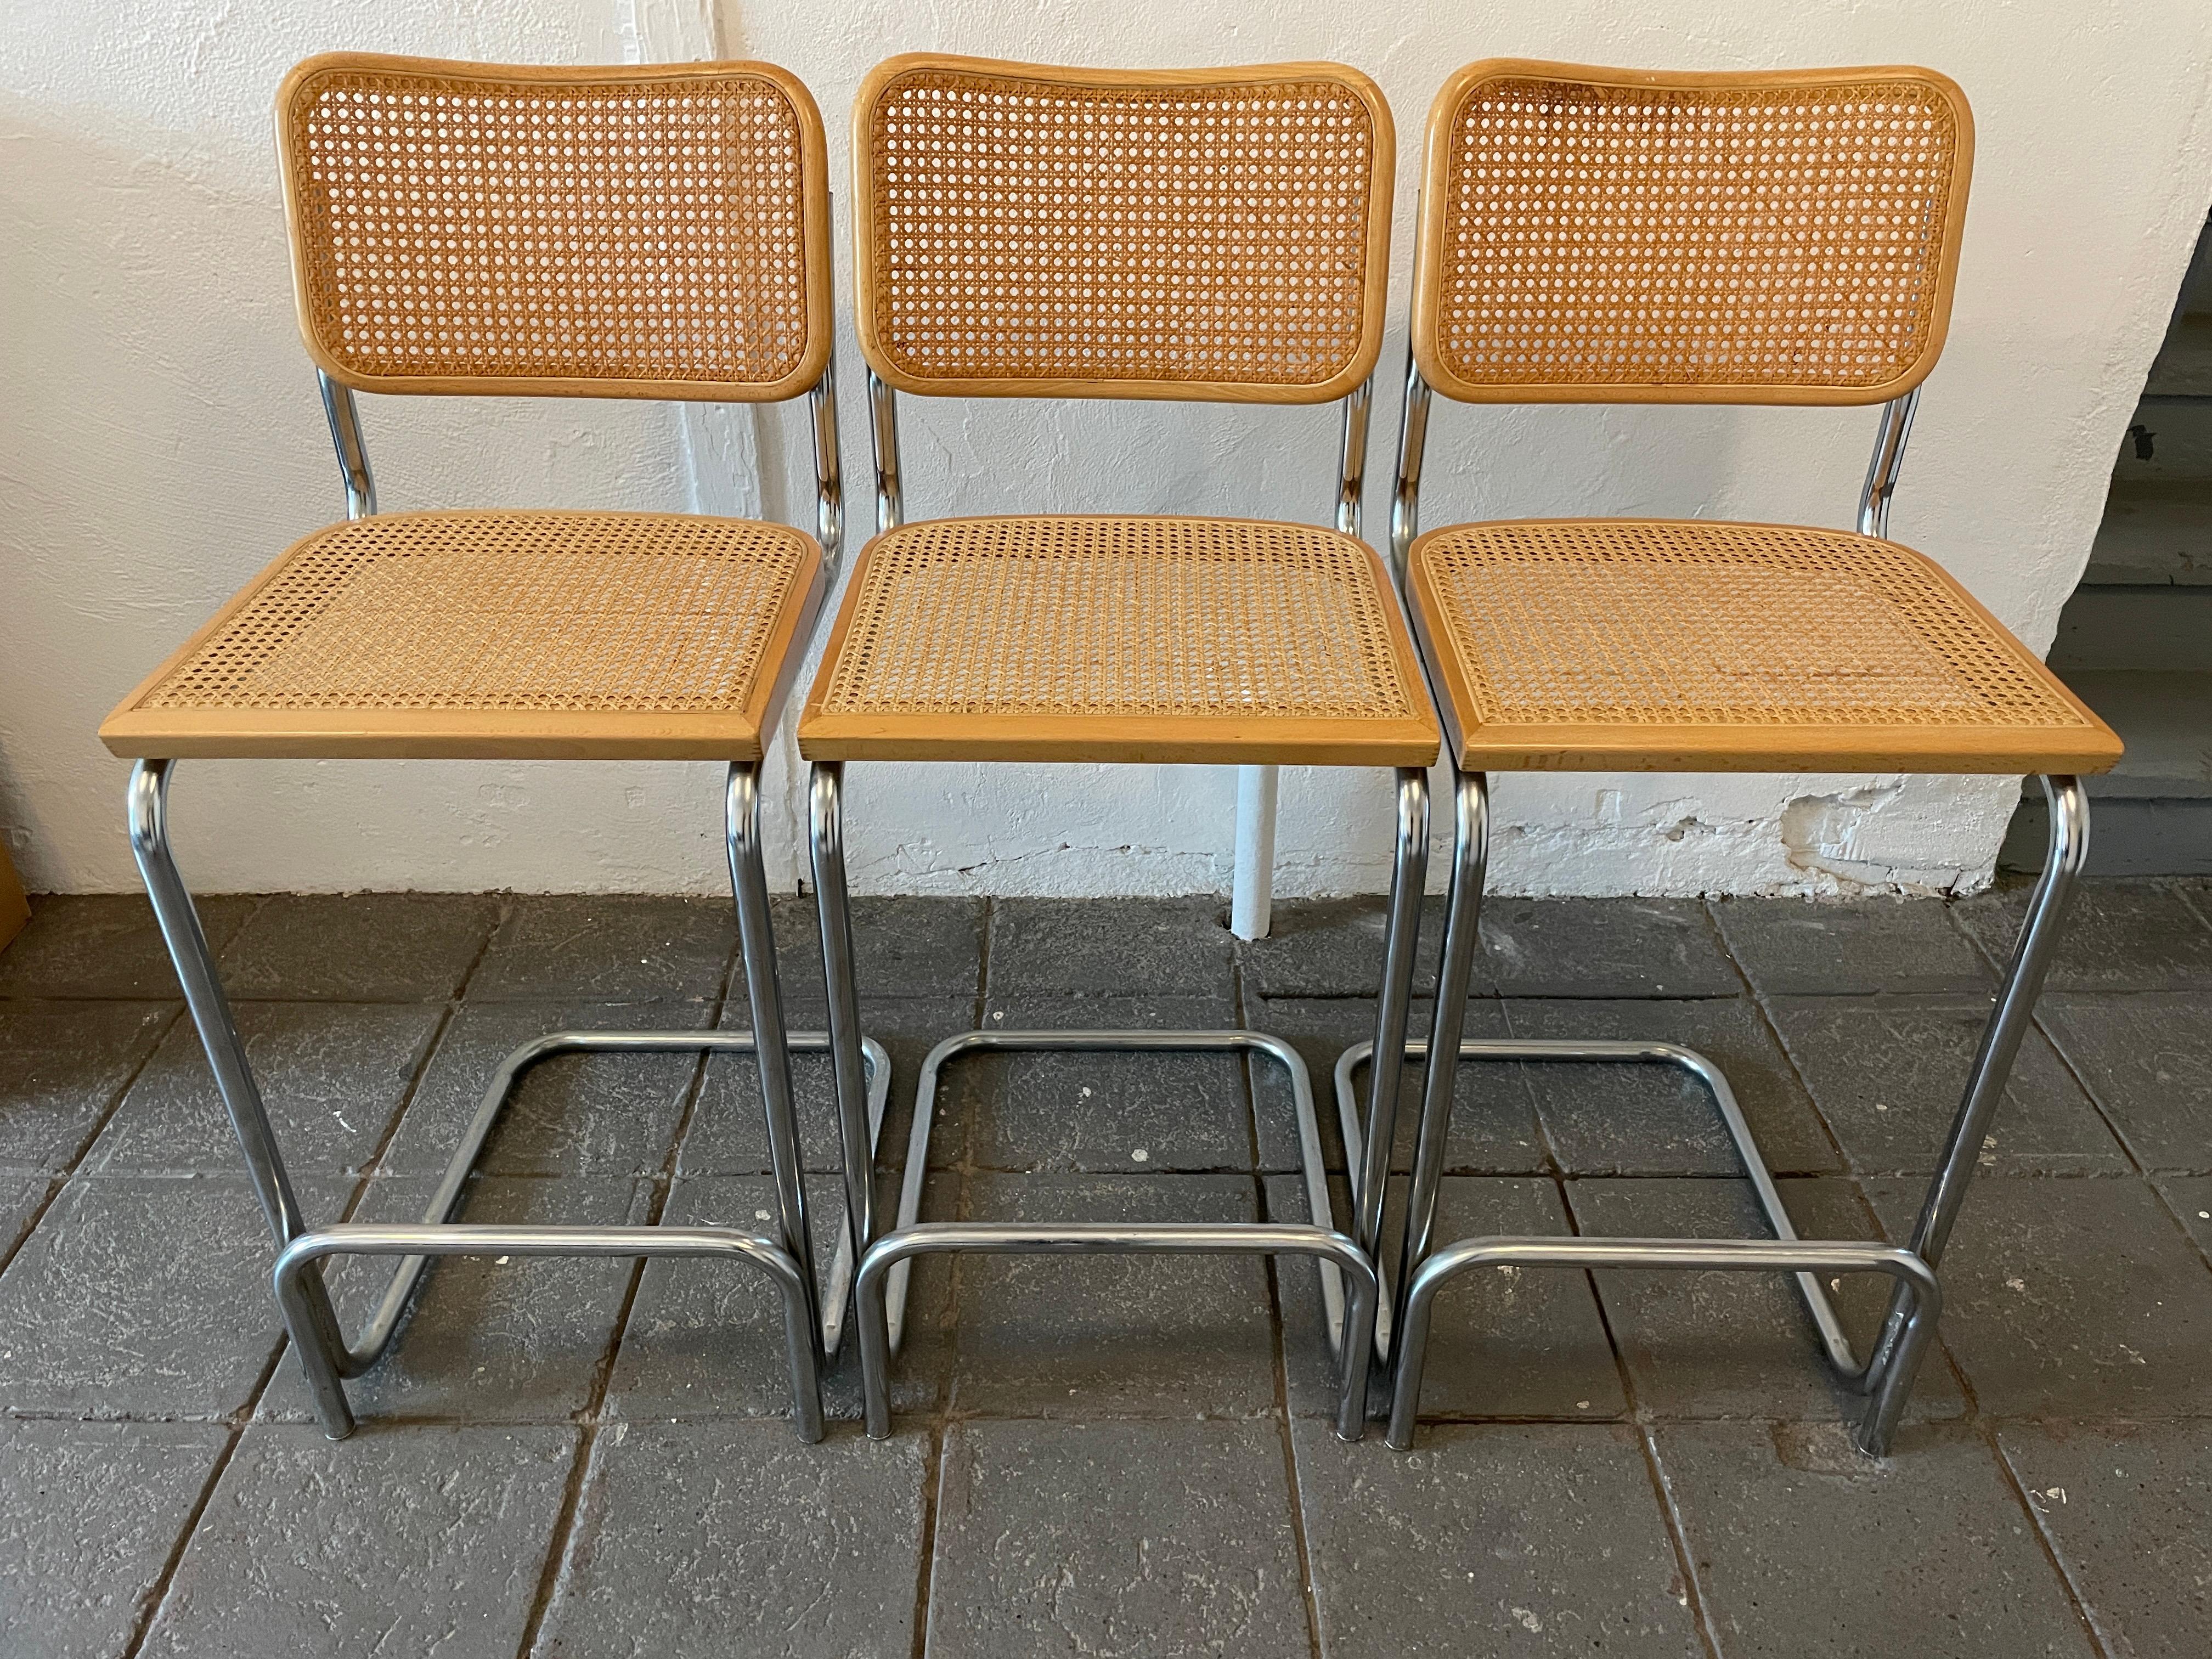 Set of 3 Mid-Century Modern Marcel Breuer cesca style bar stools chrome tubular framed and cane woven seats. 28.25